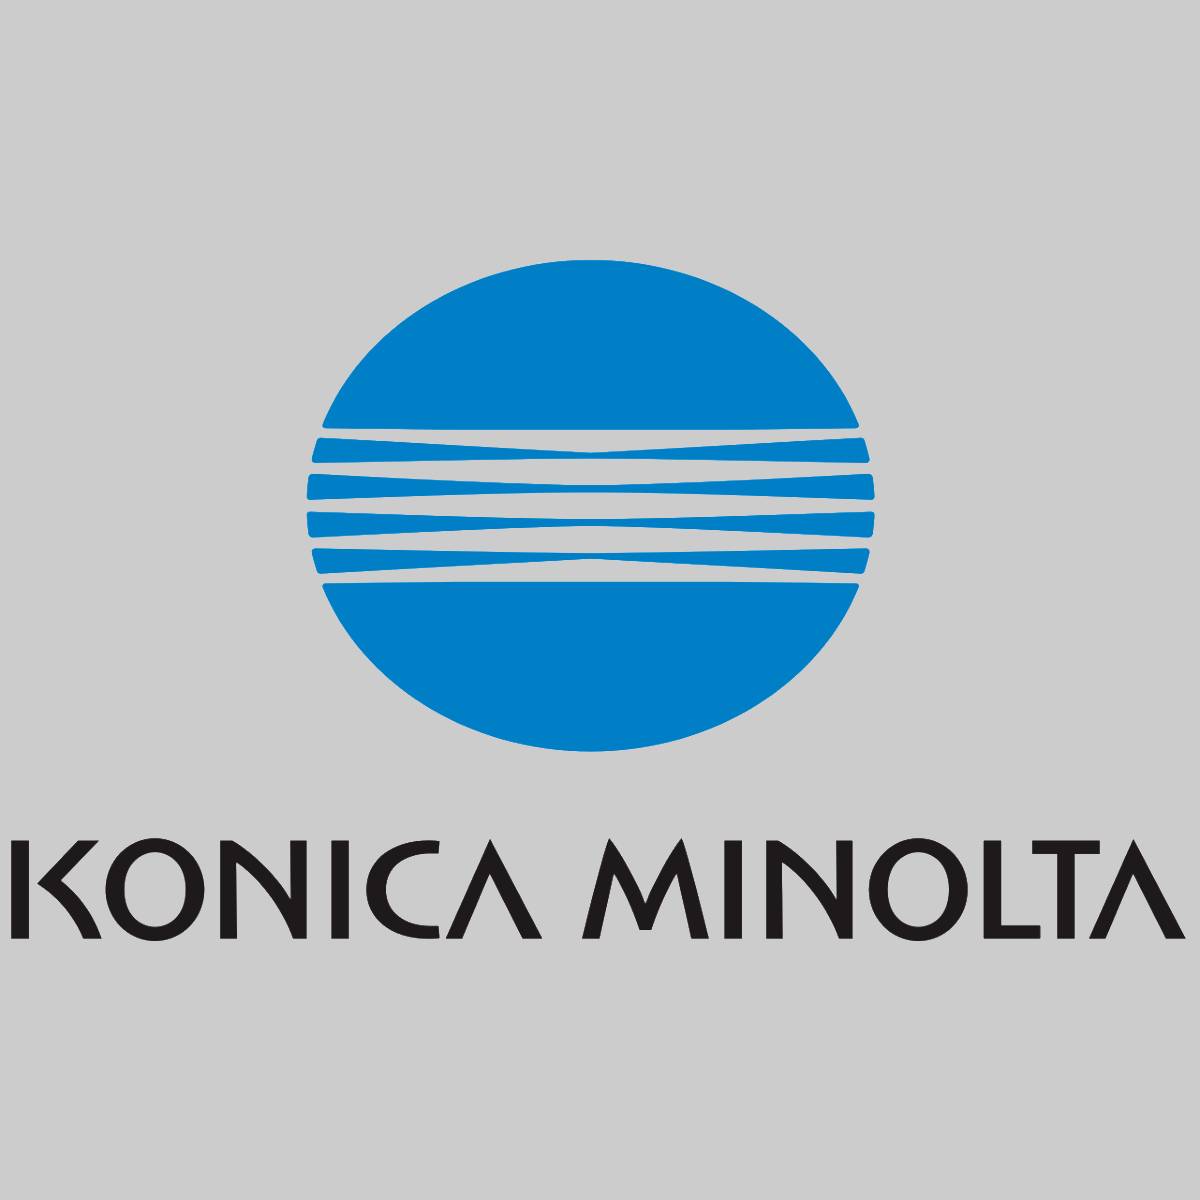 "Original Konica Minolta Transfer Roller 65AA26111 for Bizhub Pro C500-C6500 NEW